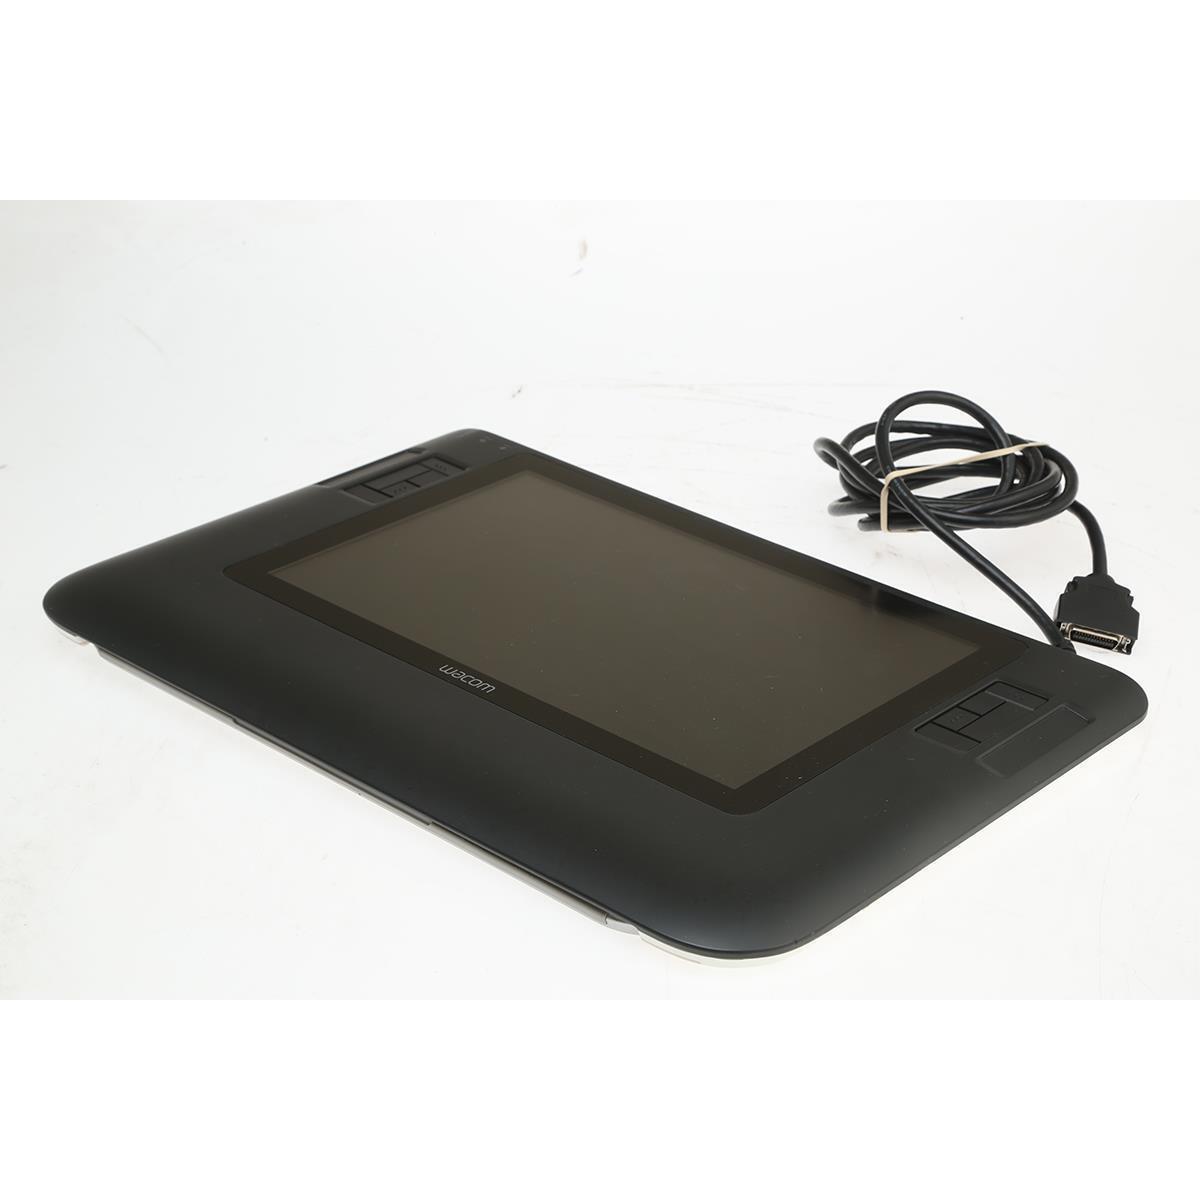 Wacom DTZ-1200W Cintiq 12WX 12" Pen Display Graphic Drawing Tablet SKU#1621855